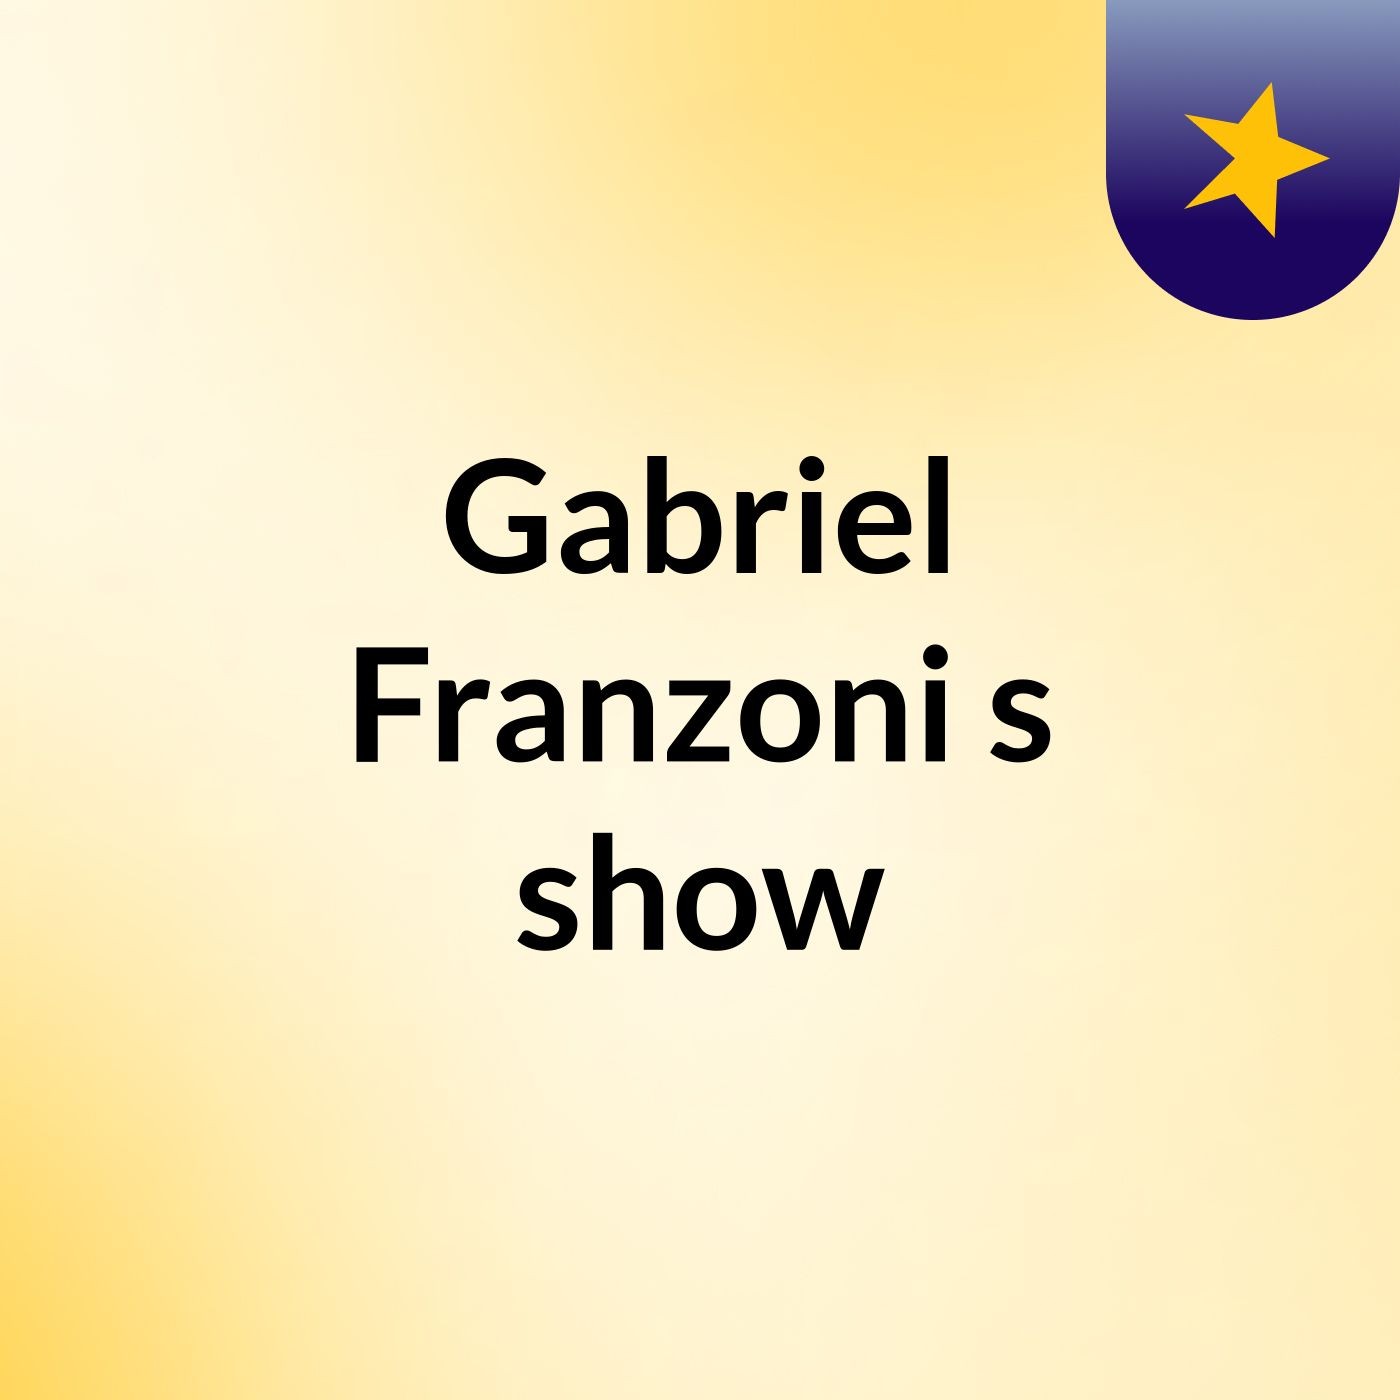 Gabriel Franzoni's show